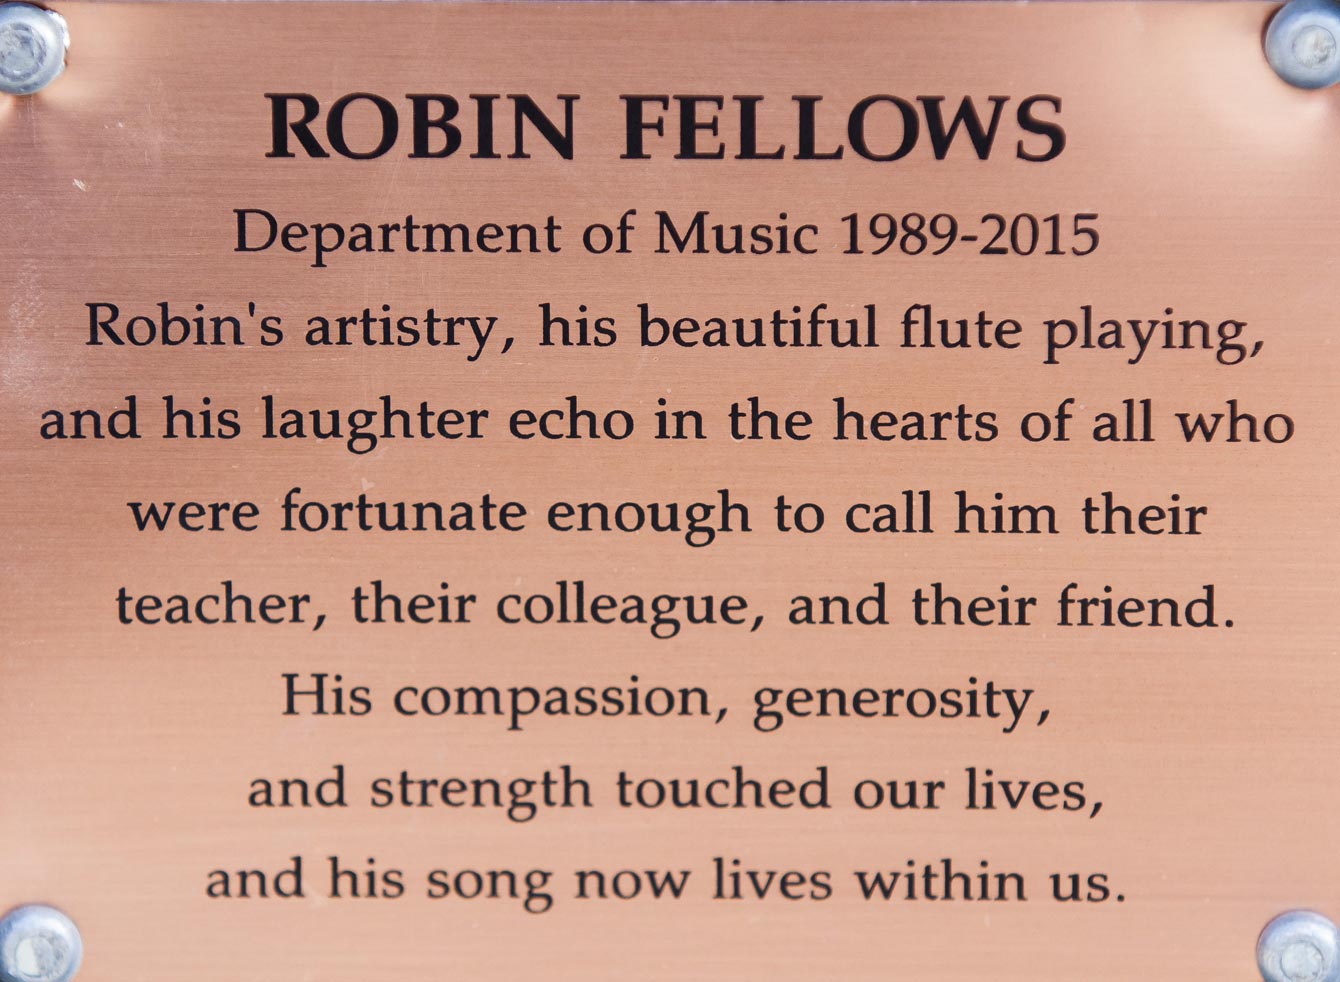 Copper plate, Robin Fellows